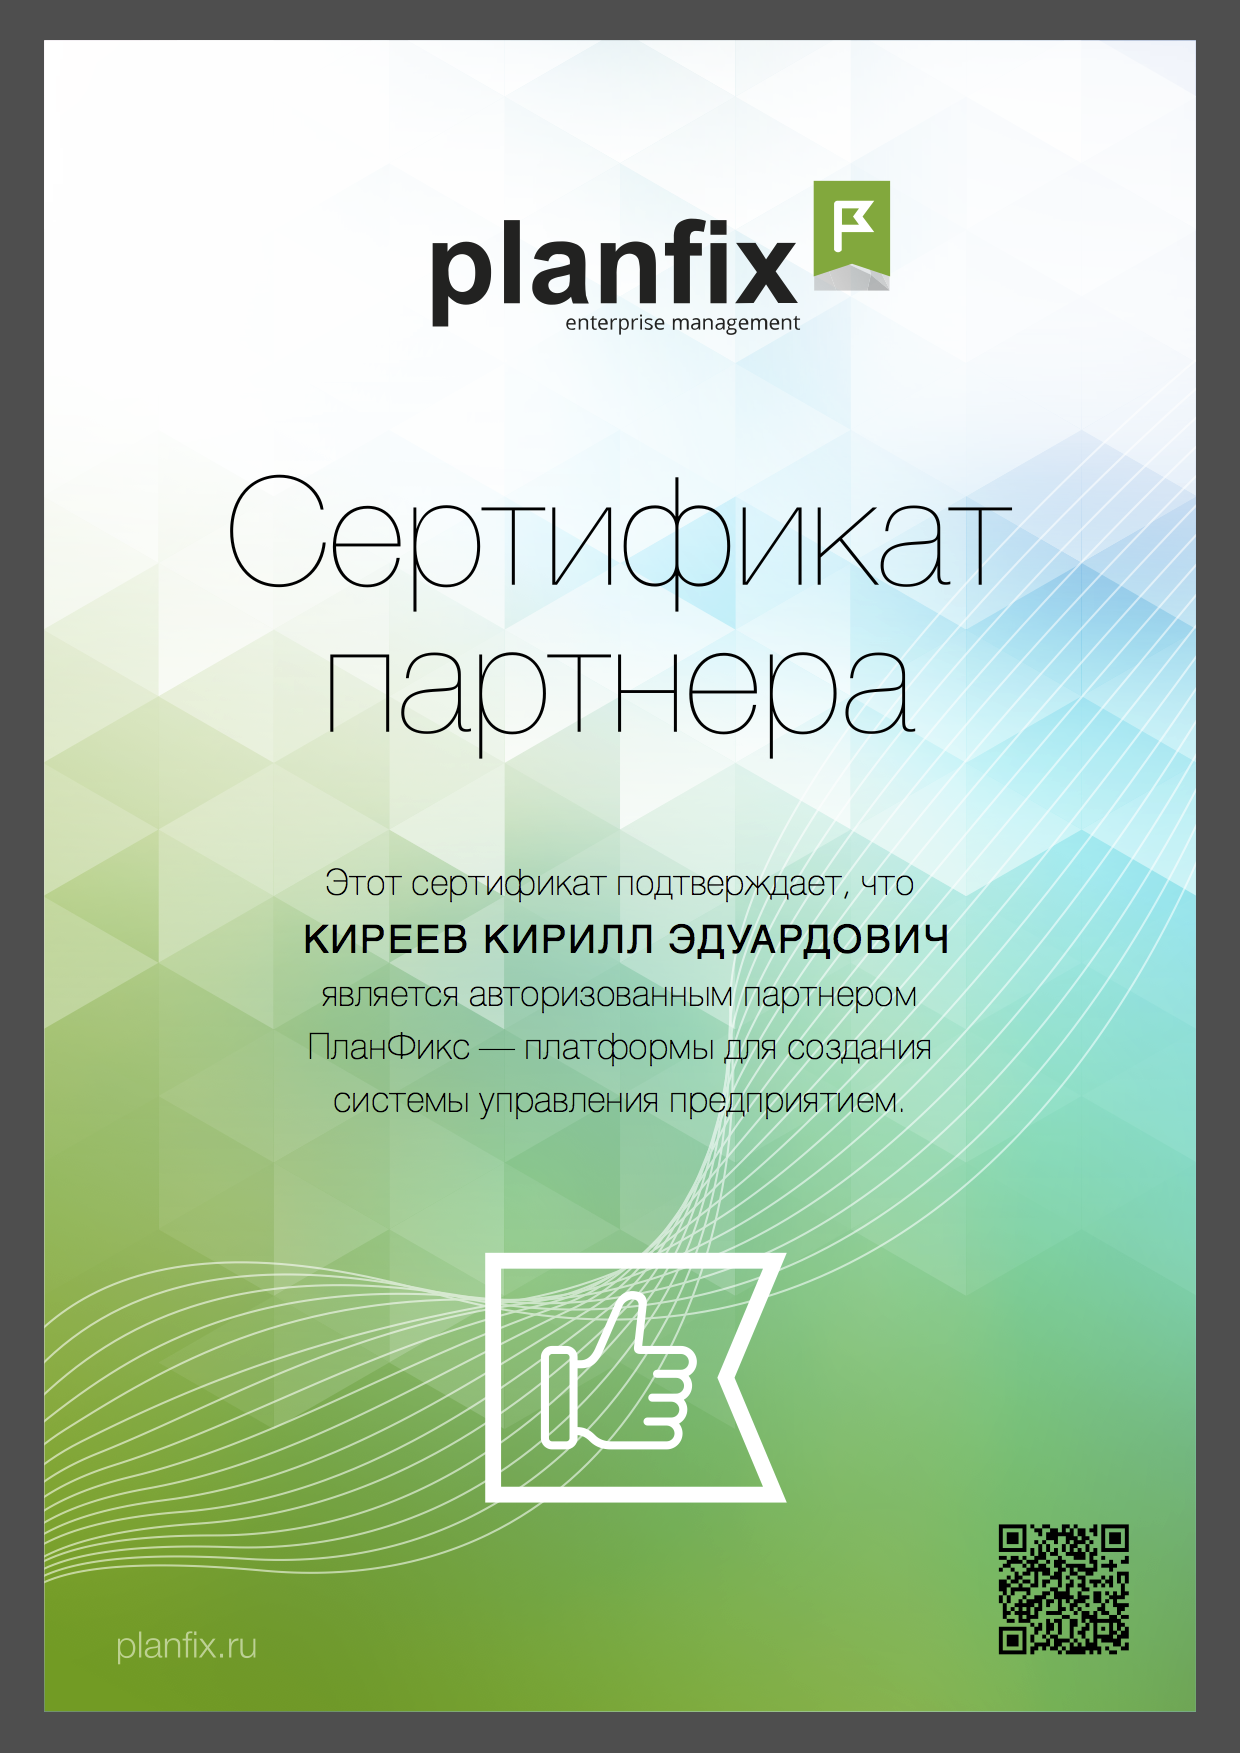 Сертификат планфикс